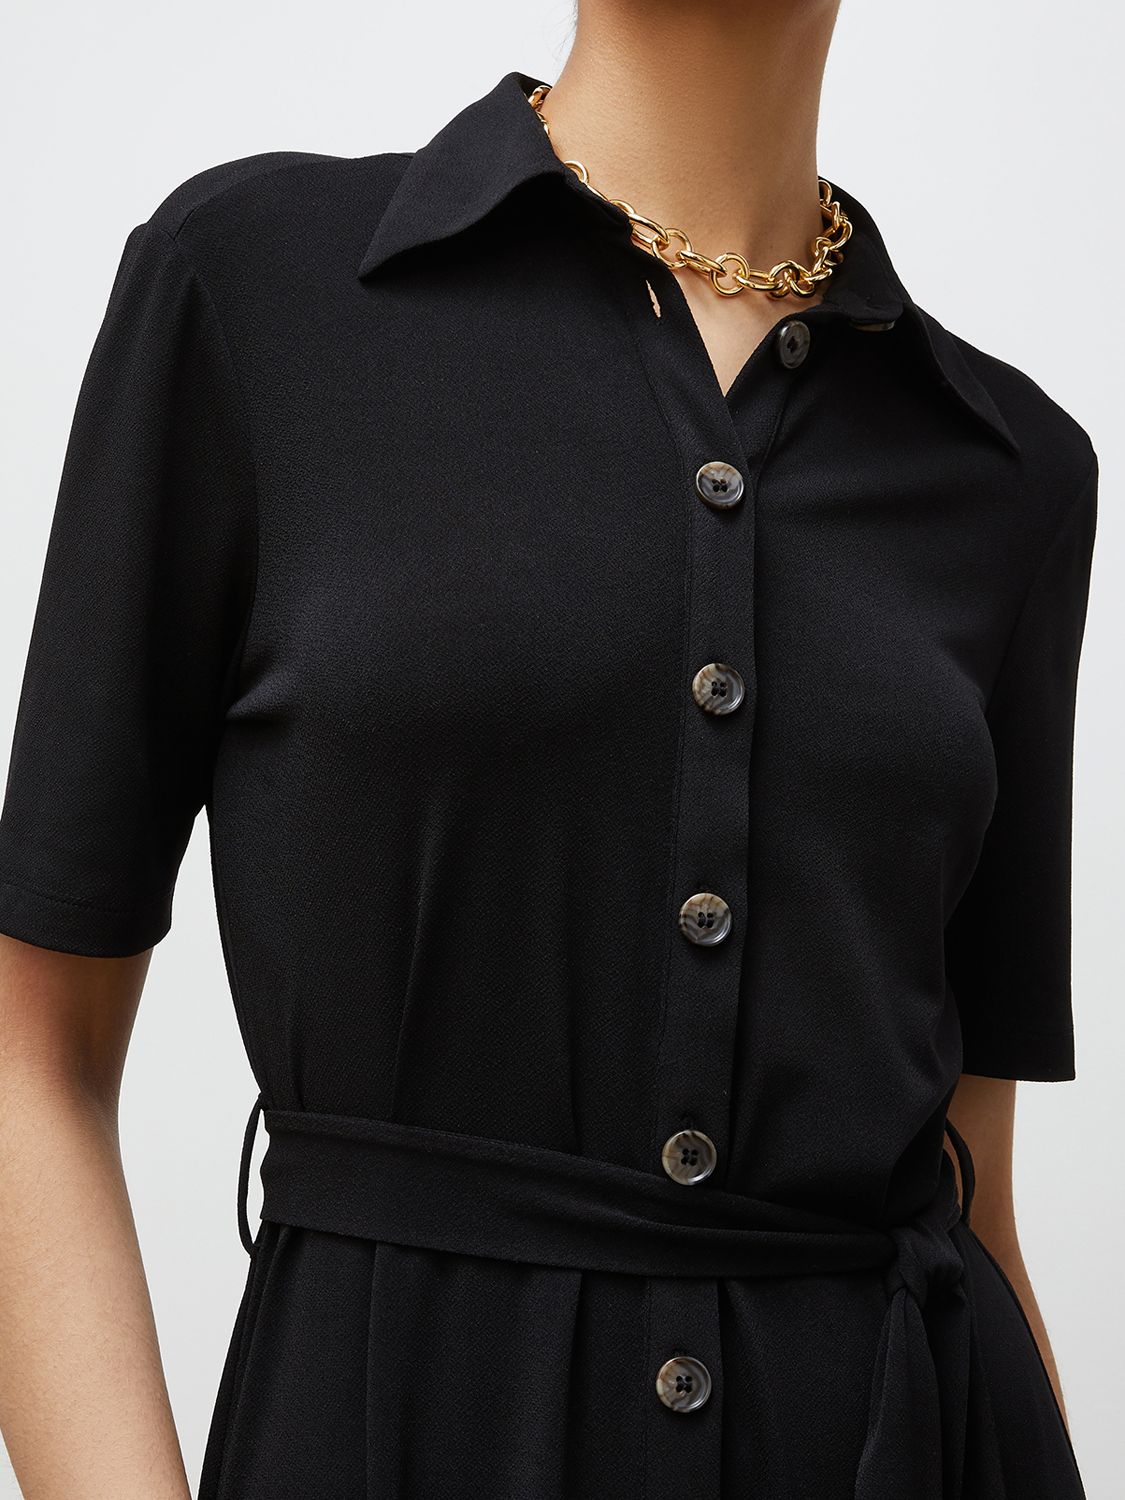 Finery Maddie Crepe Shirt Dress, Black at John Lewis & Partners